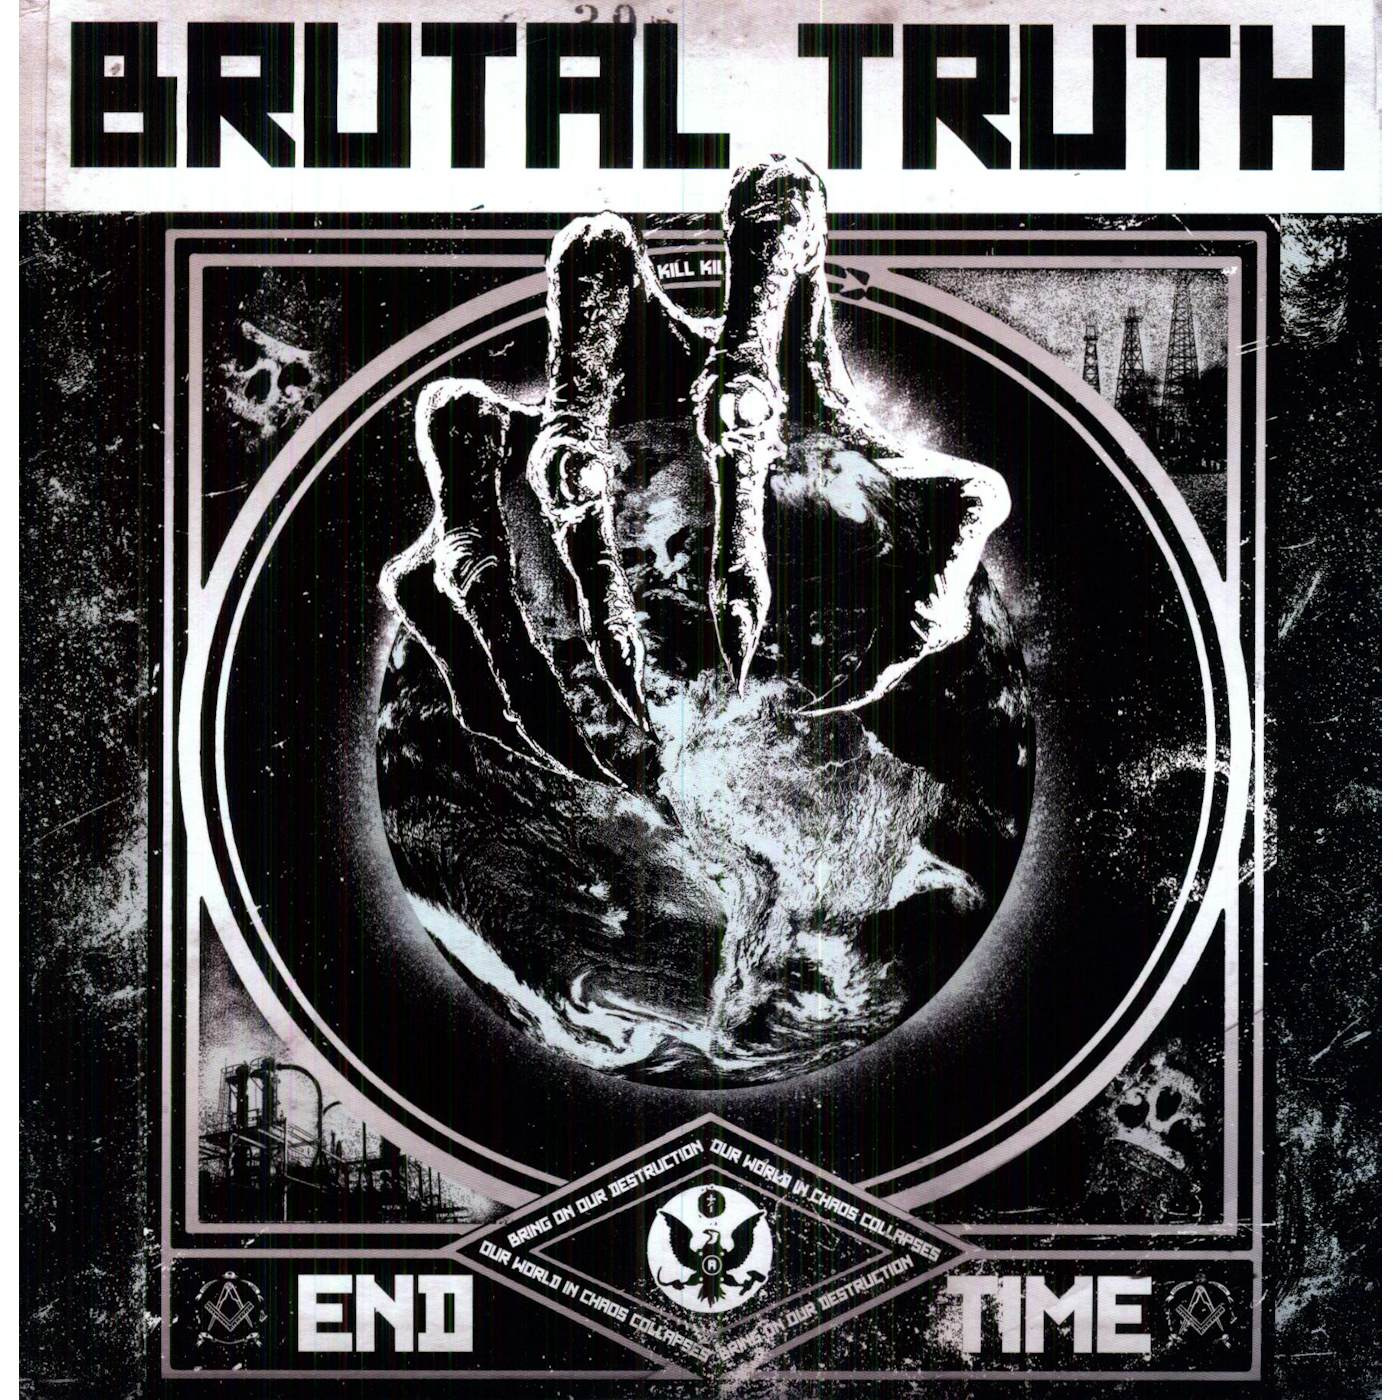 Brutal Truth End Time Vinyl Record